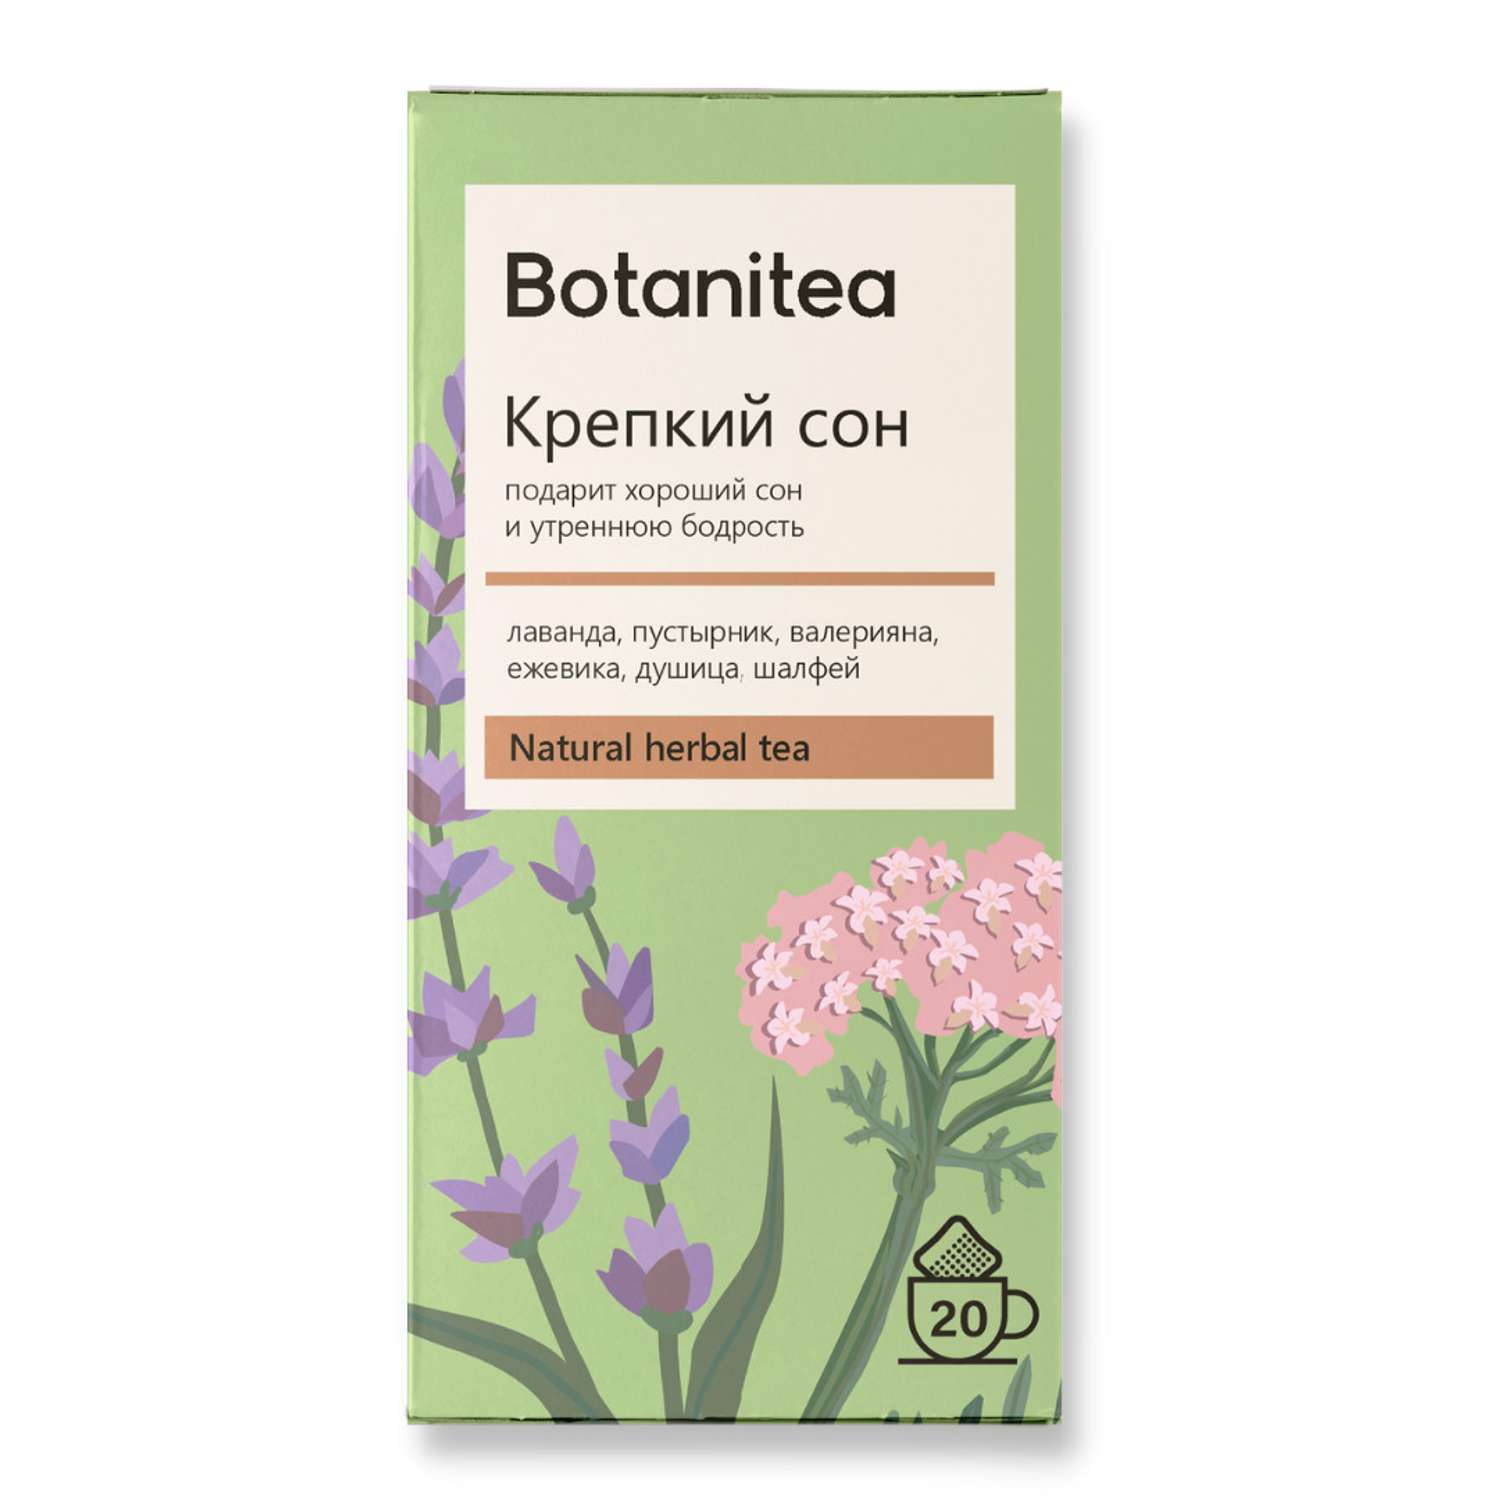 Botanitea. Biopractika чай. Сироп валерианы для сна. , Слабогазированный botanitea «Antistress».